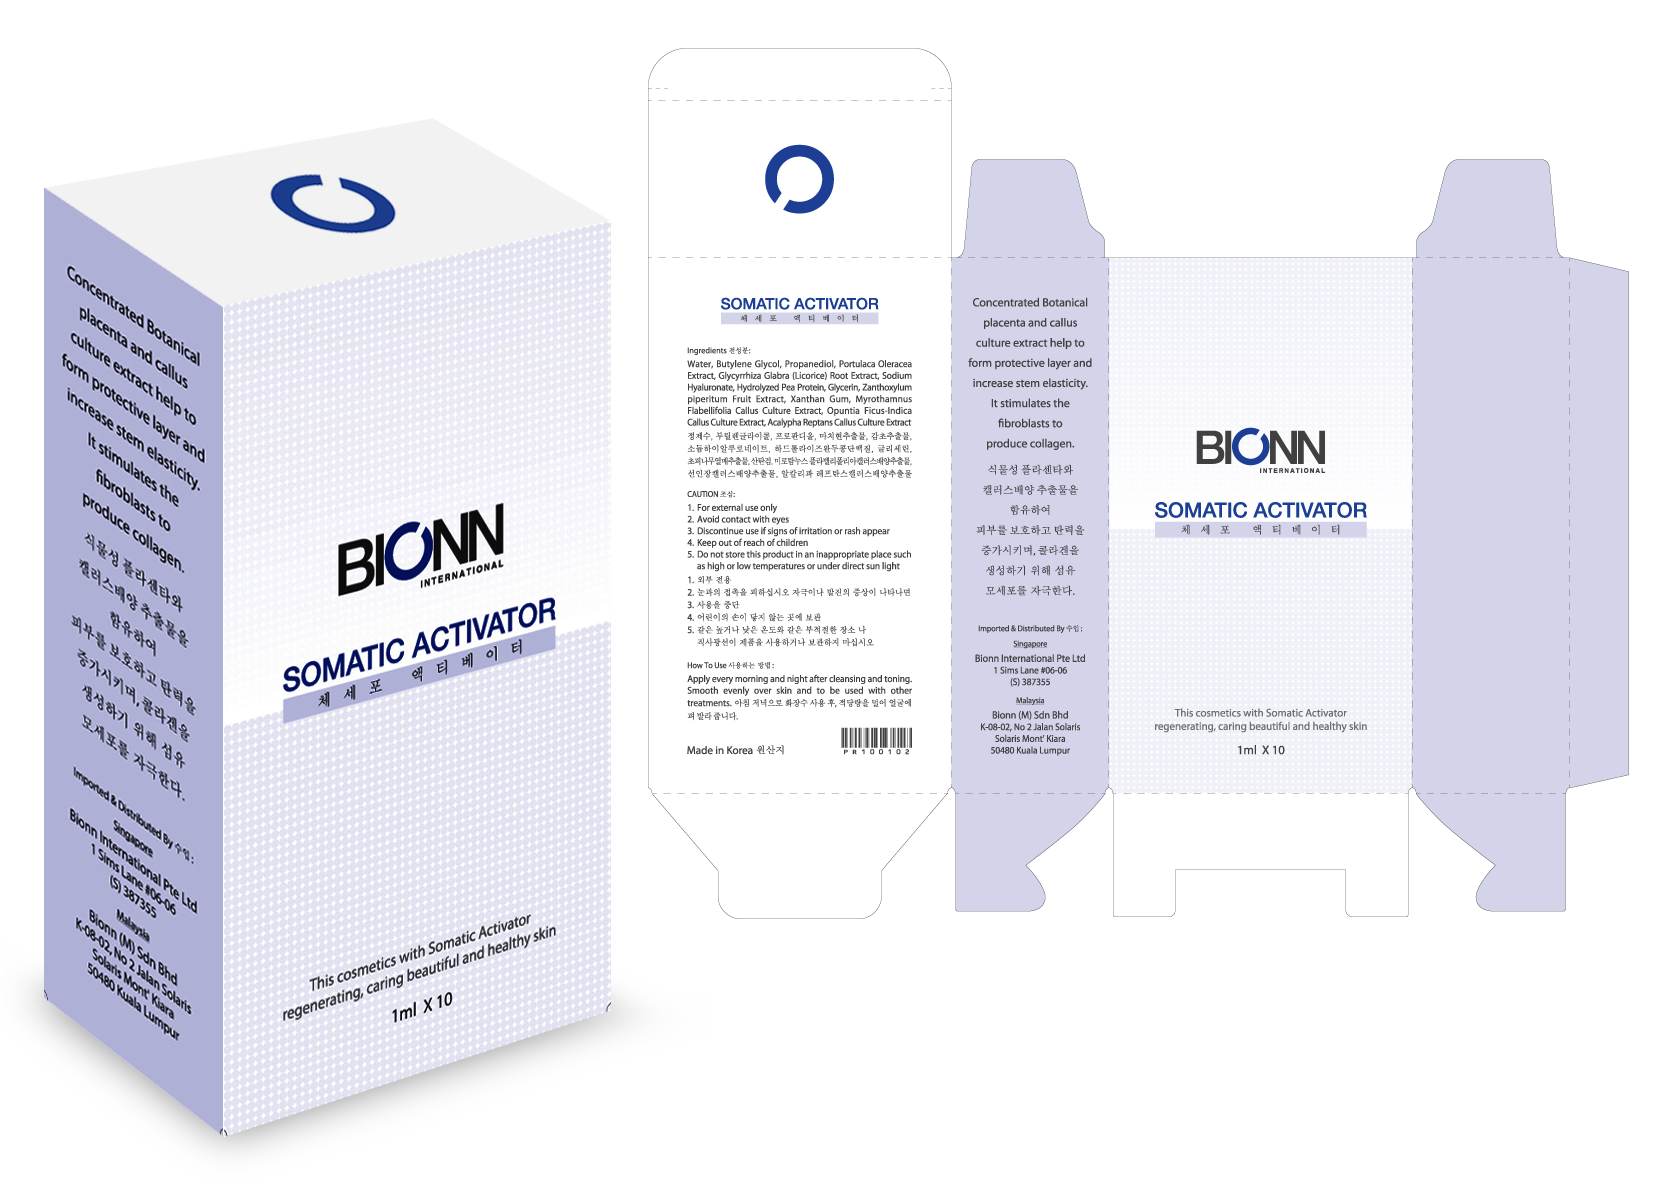 Bionn Somatic Activator